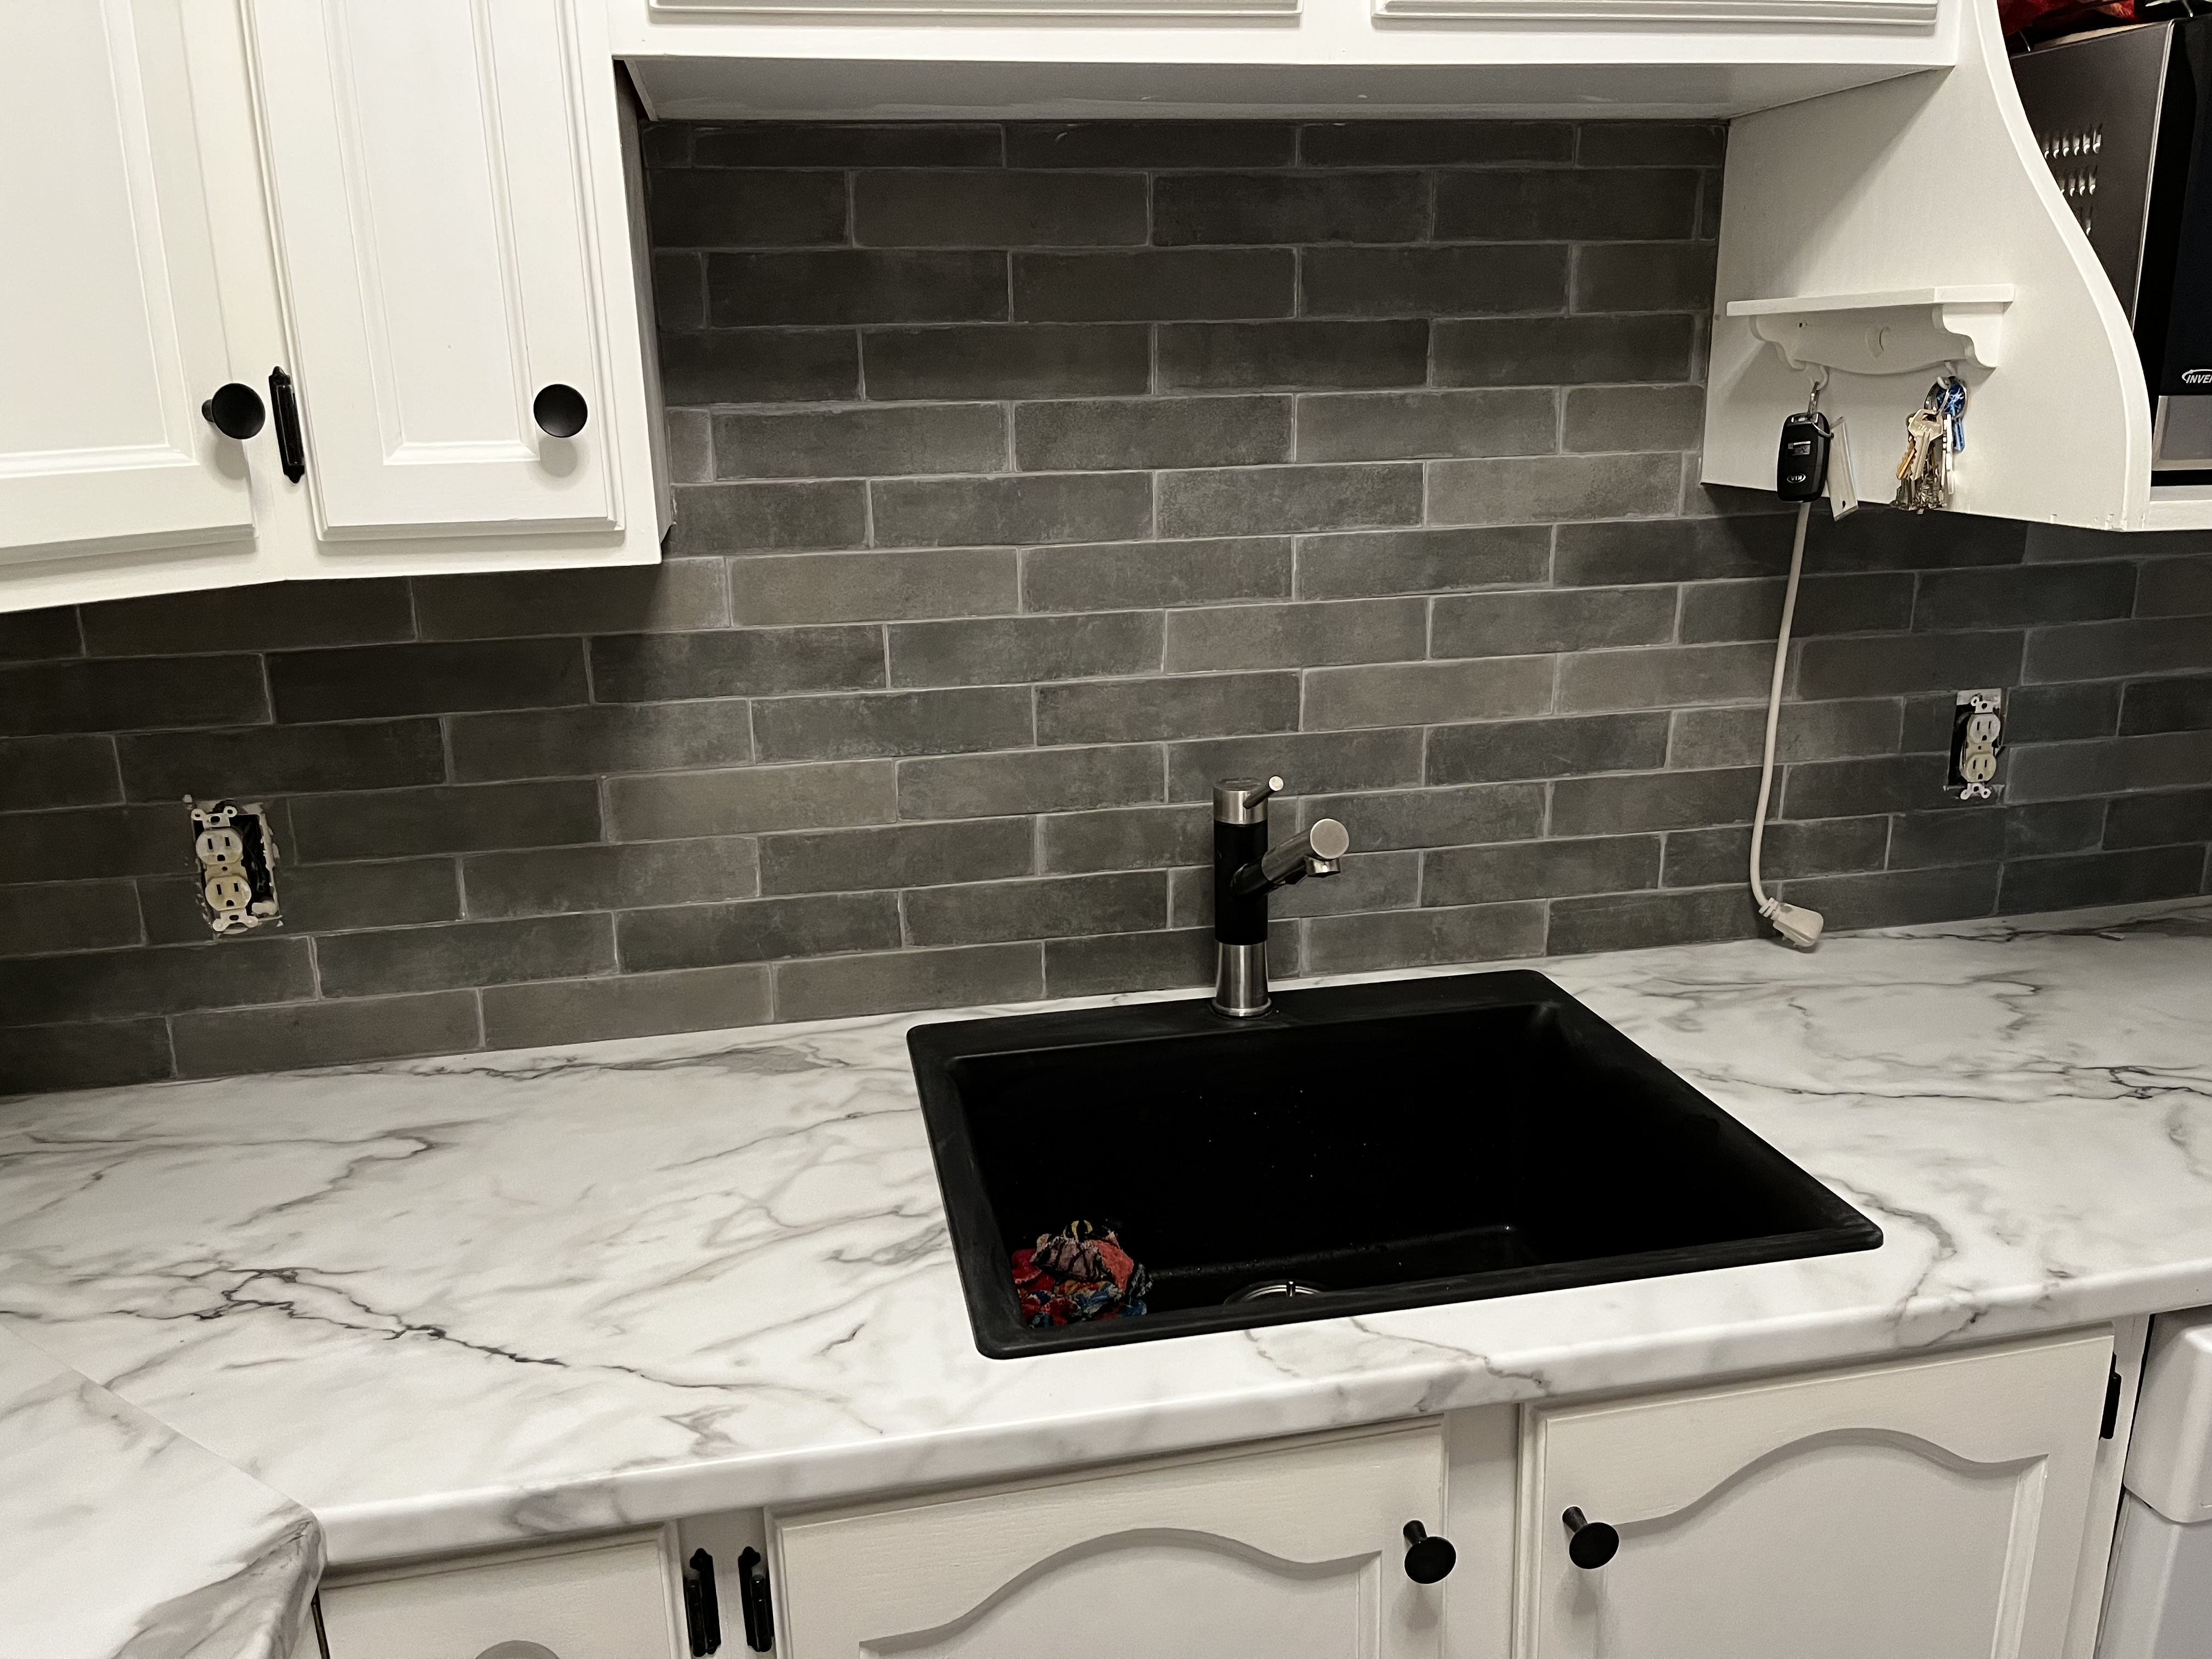 Postform Laminate with tile backsplash and granite sink